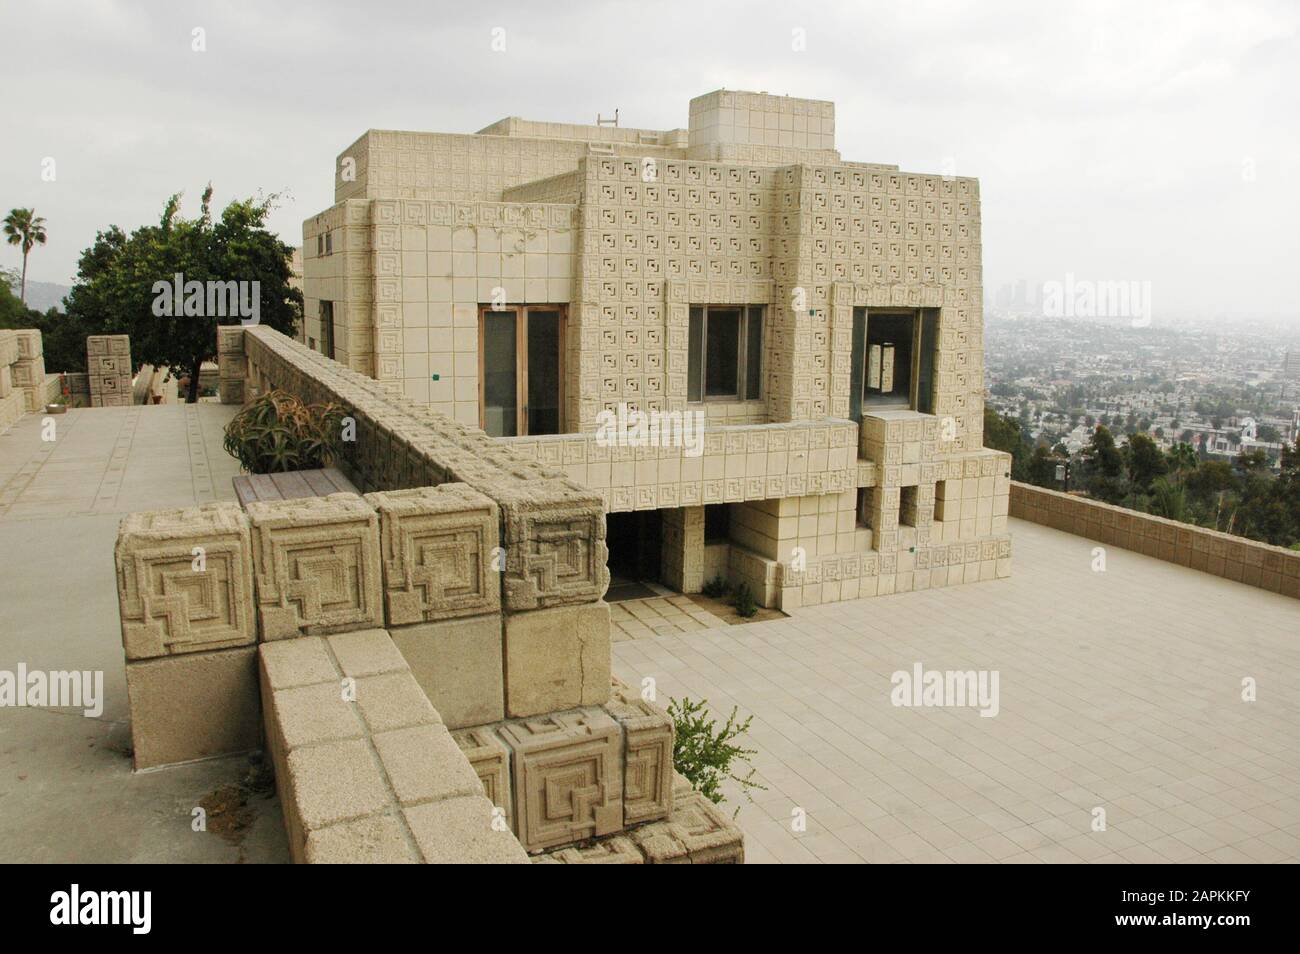 Los Angeles, California, USA. 29th Mar, 2008. The Frank Lloyd Wright -  designed Ennis House in the Los Feliz area of Los Angeles, California has  sold for 8 million, a record price